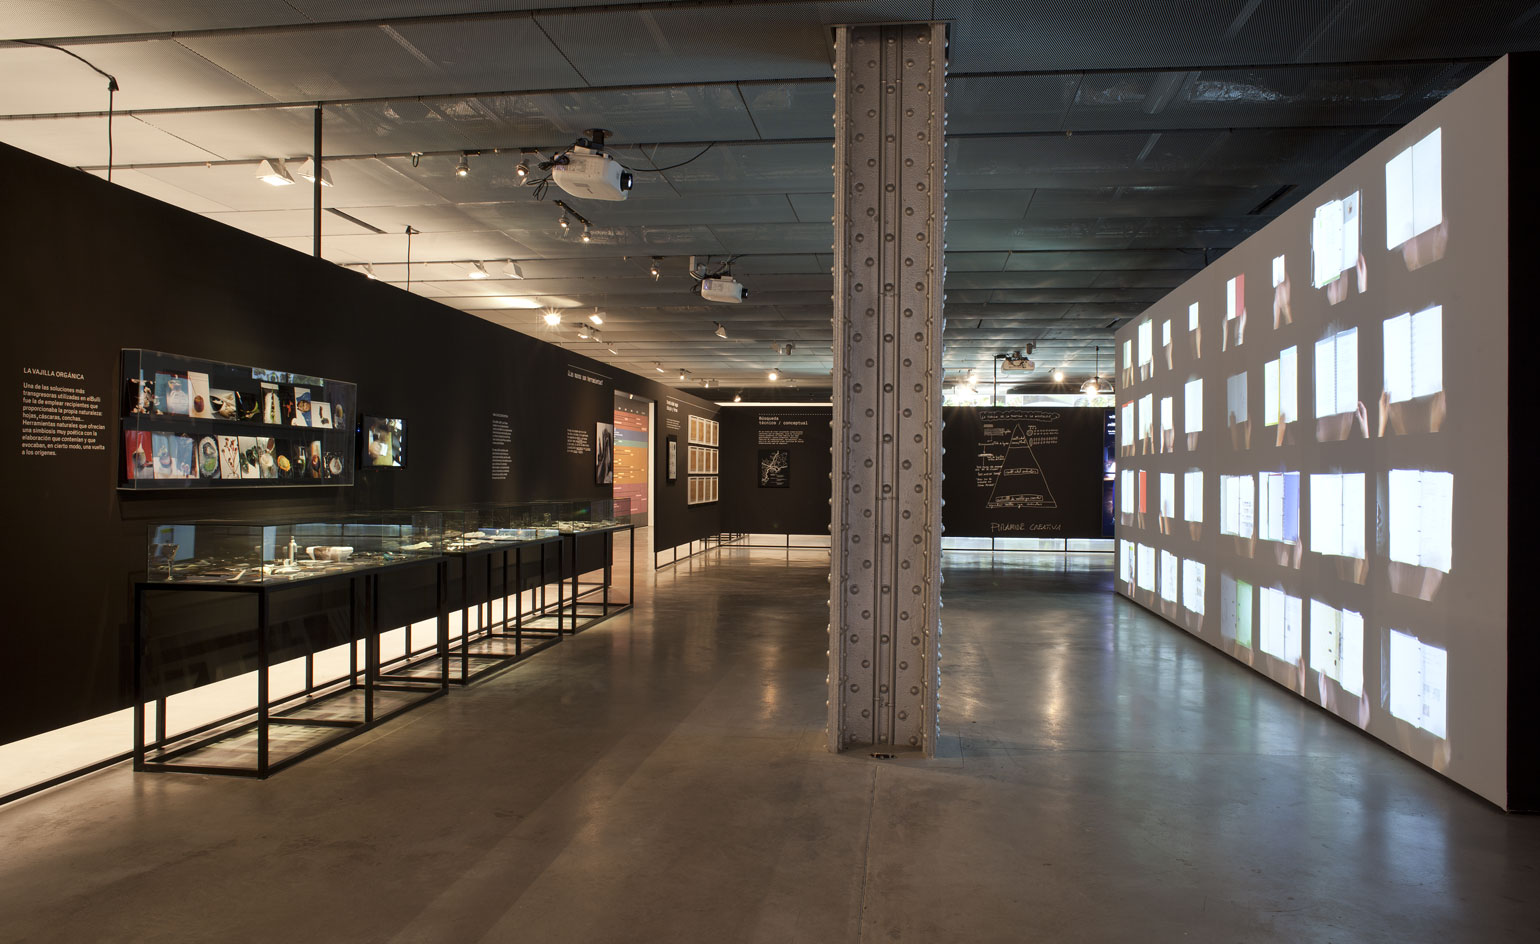 Ferran Adria workbook exhibition display on screen